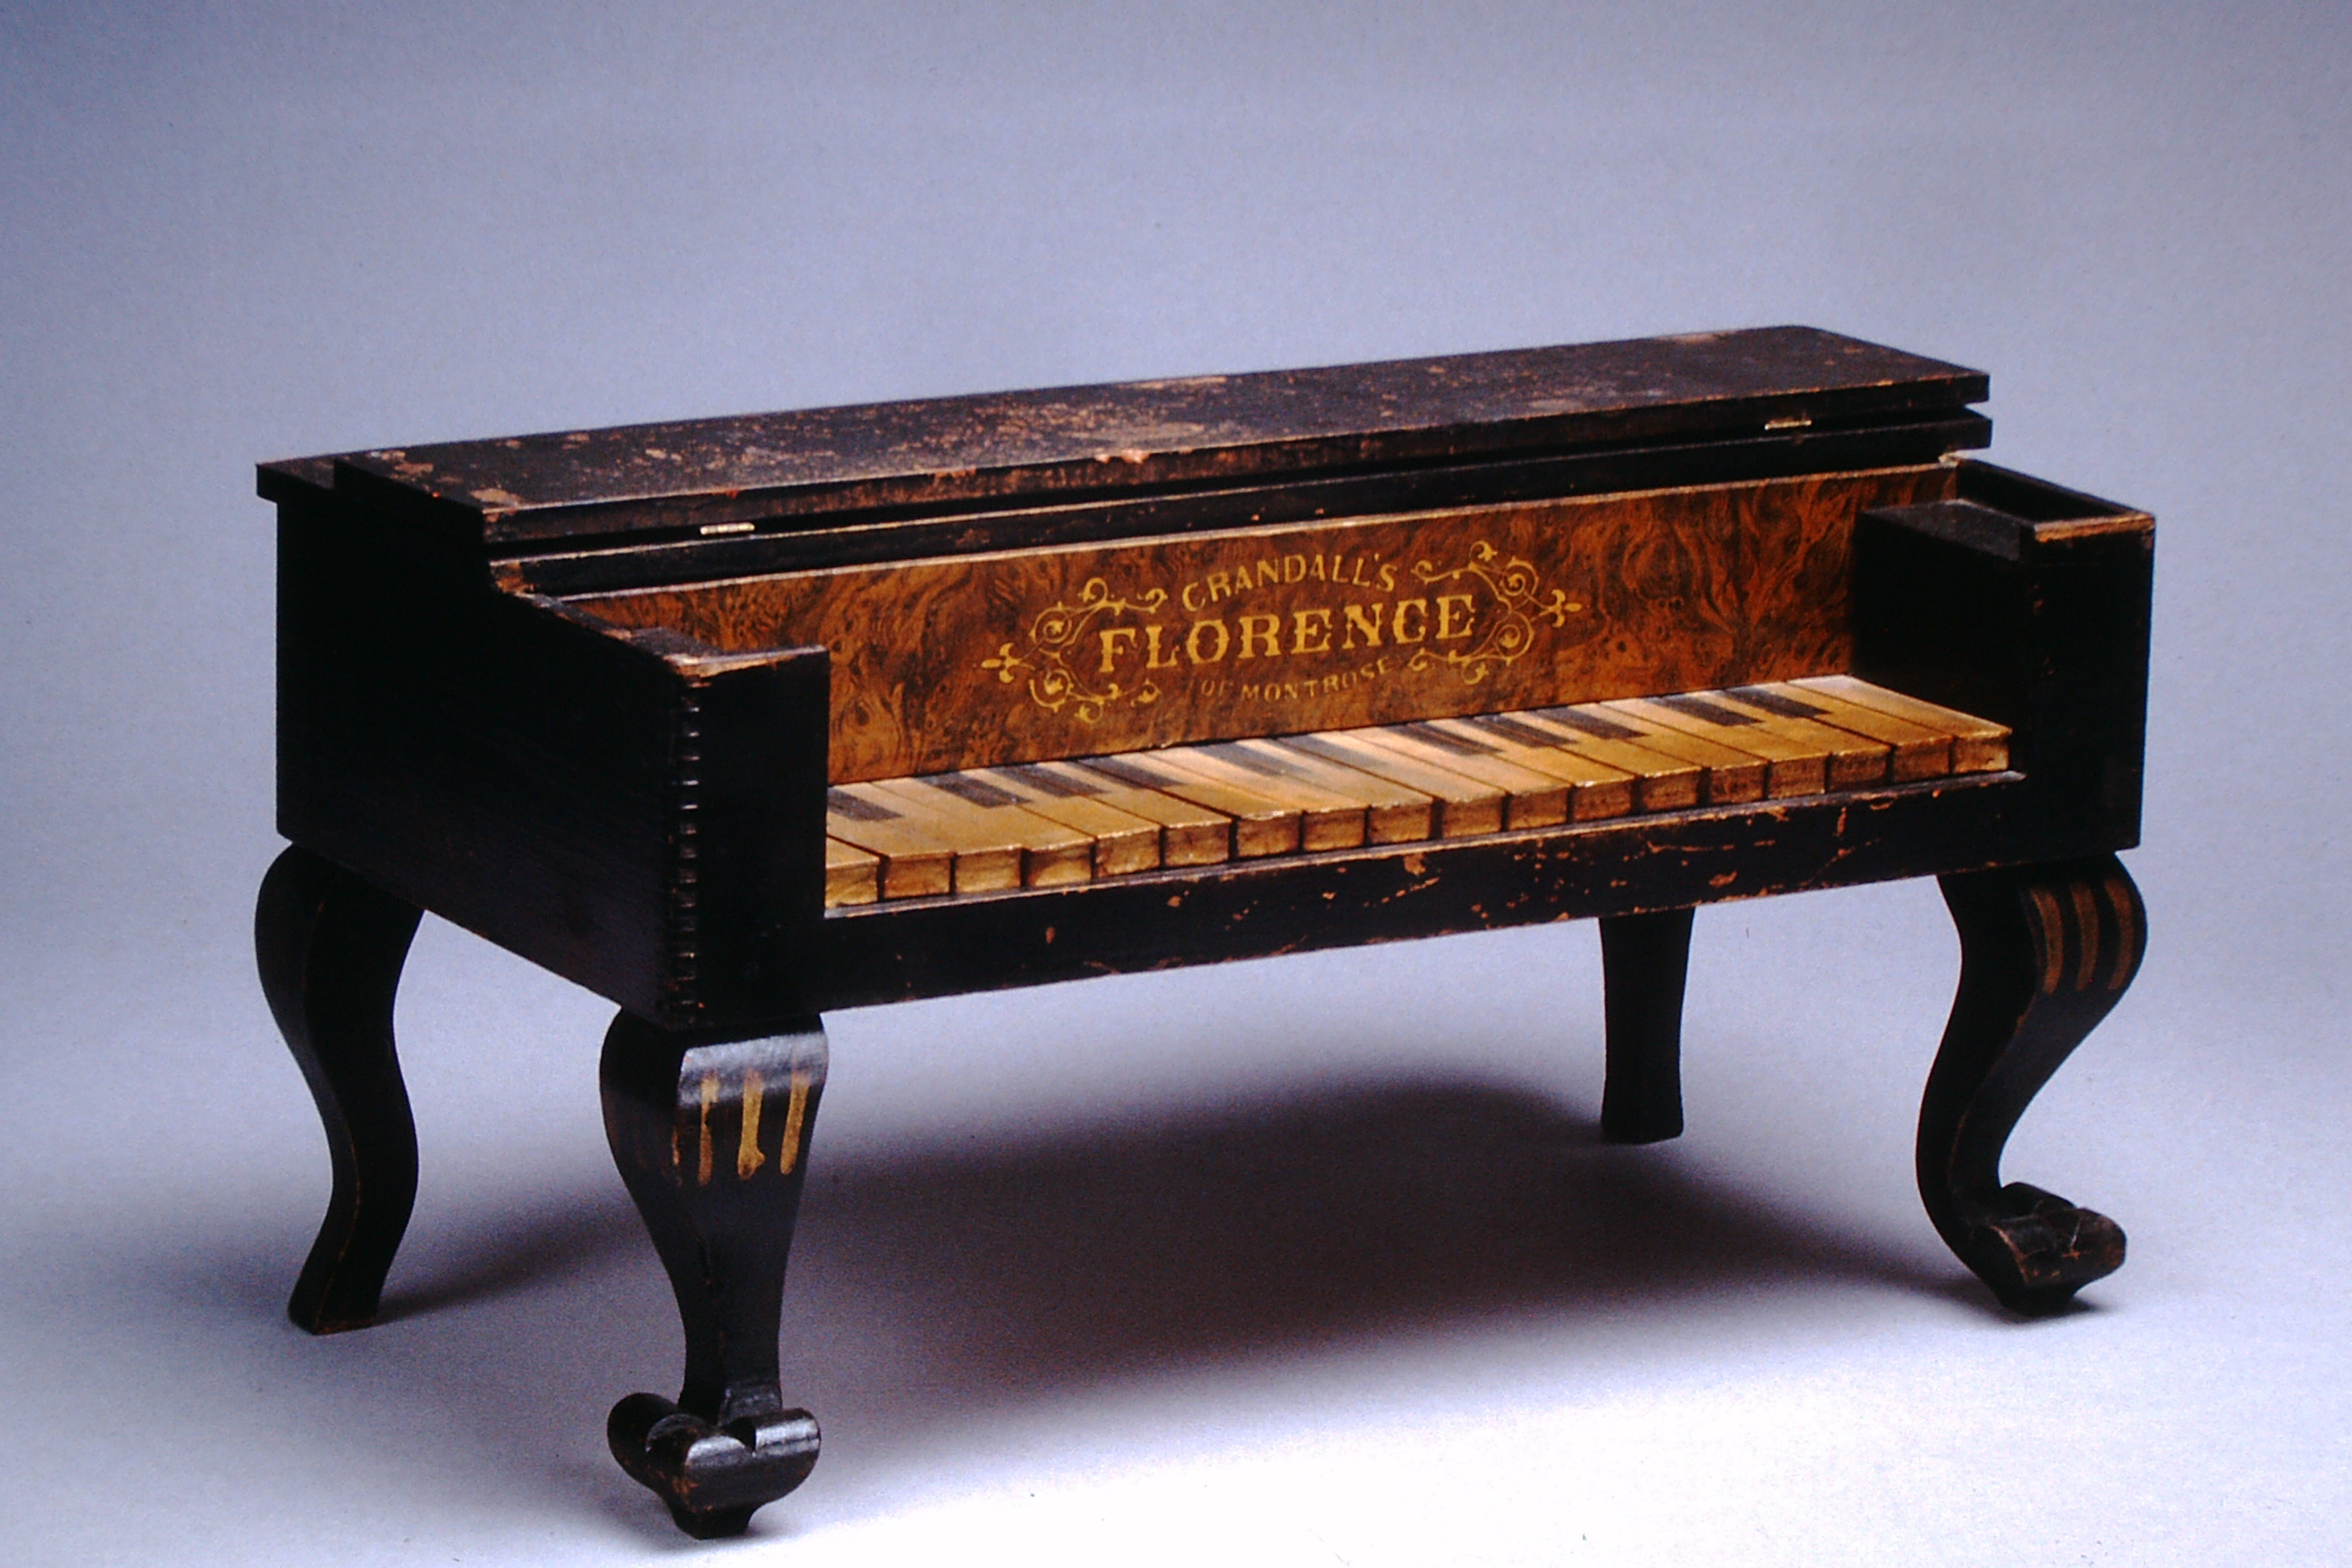 Toy piano - Wikipedia